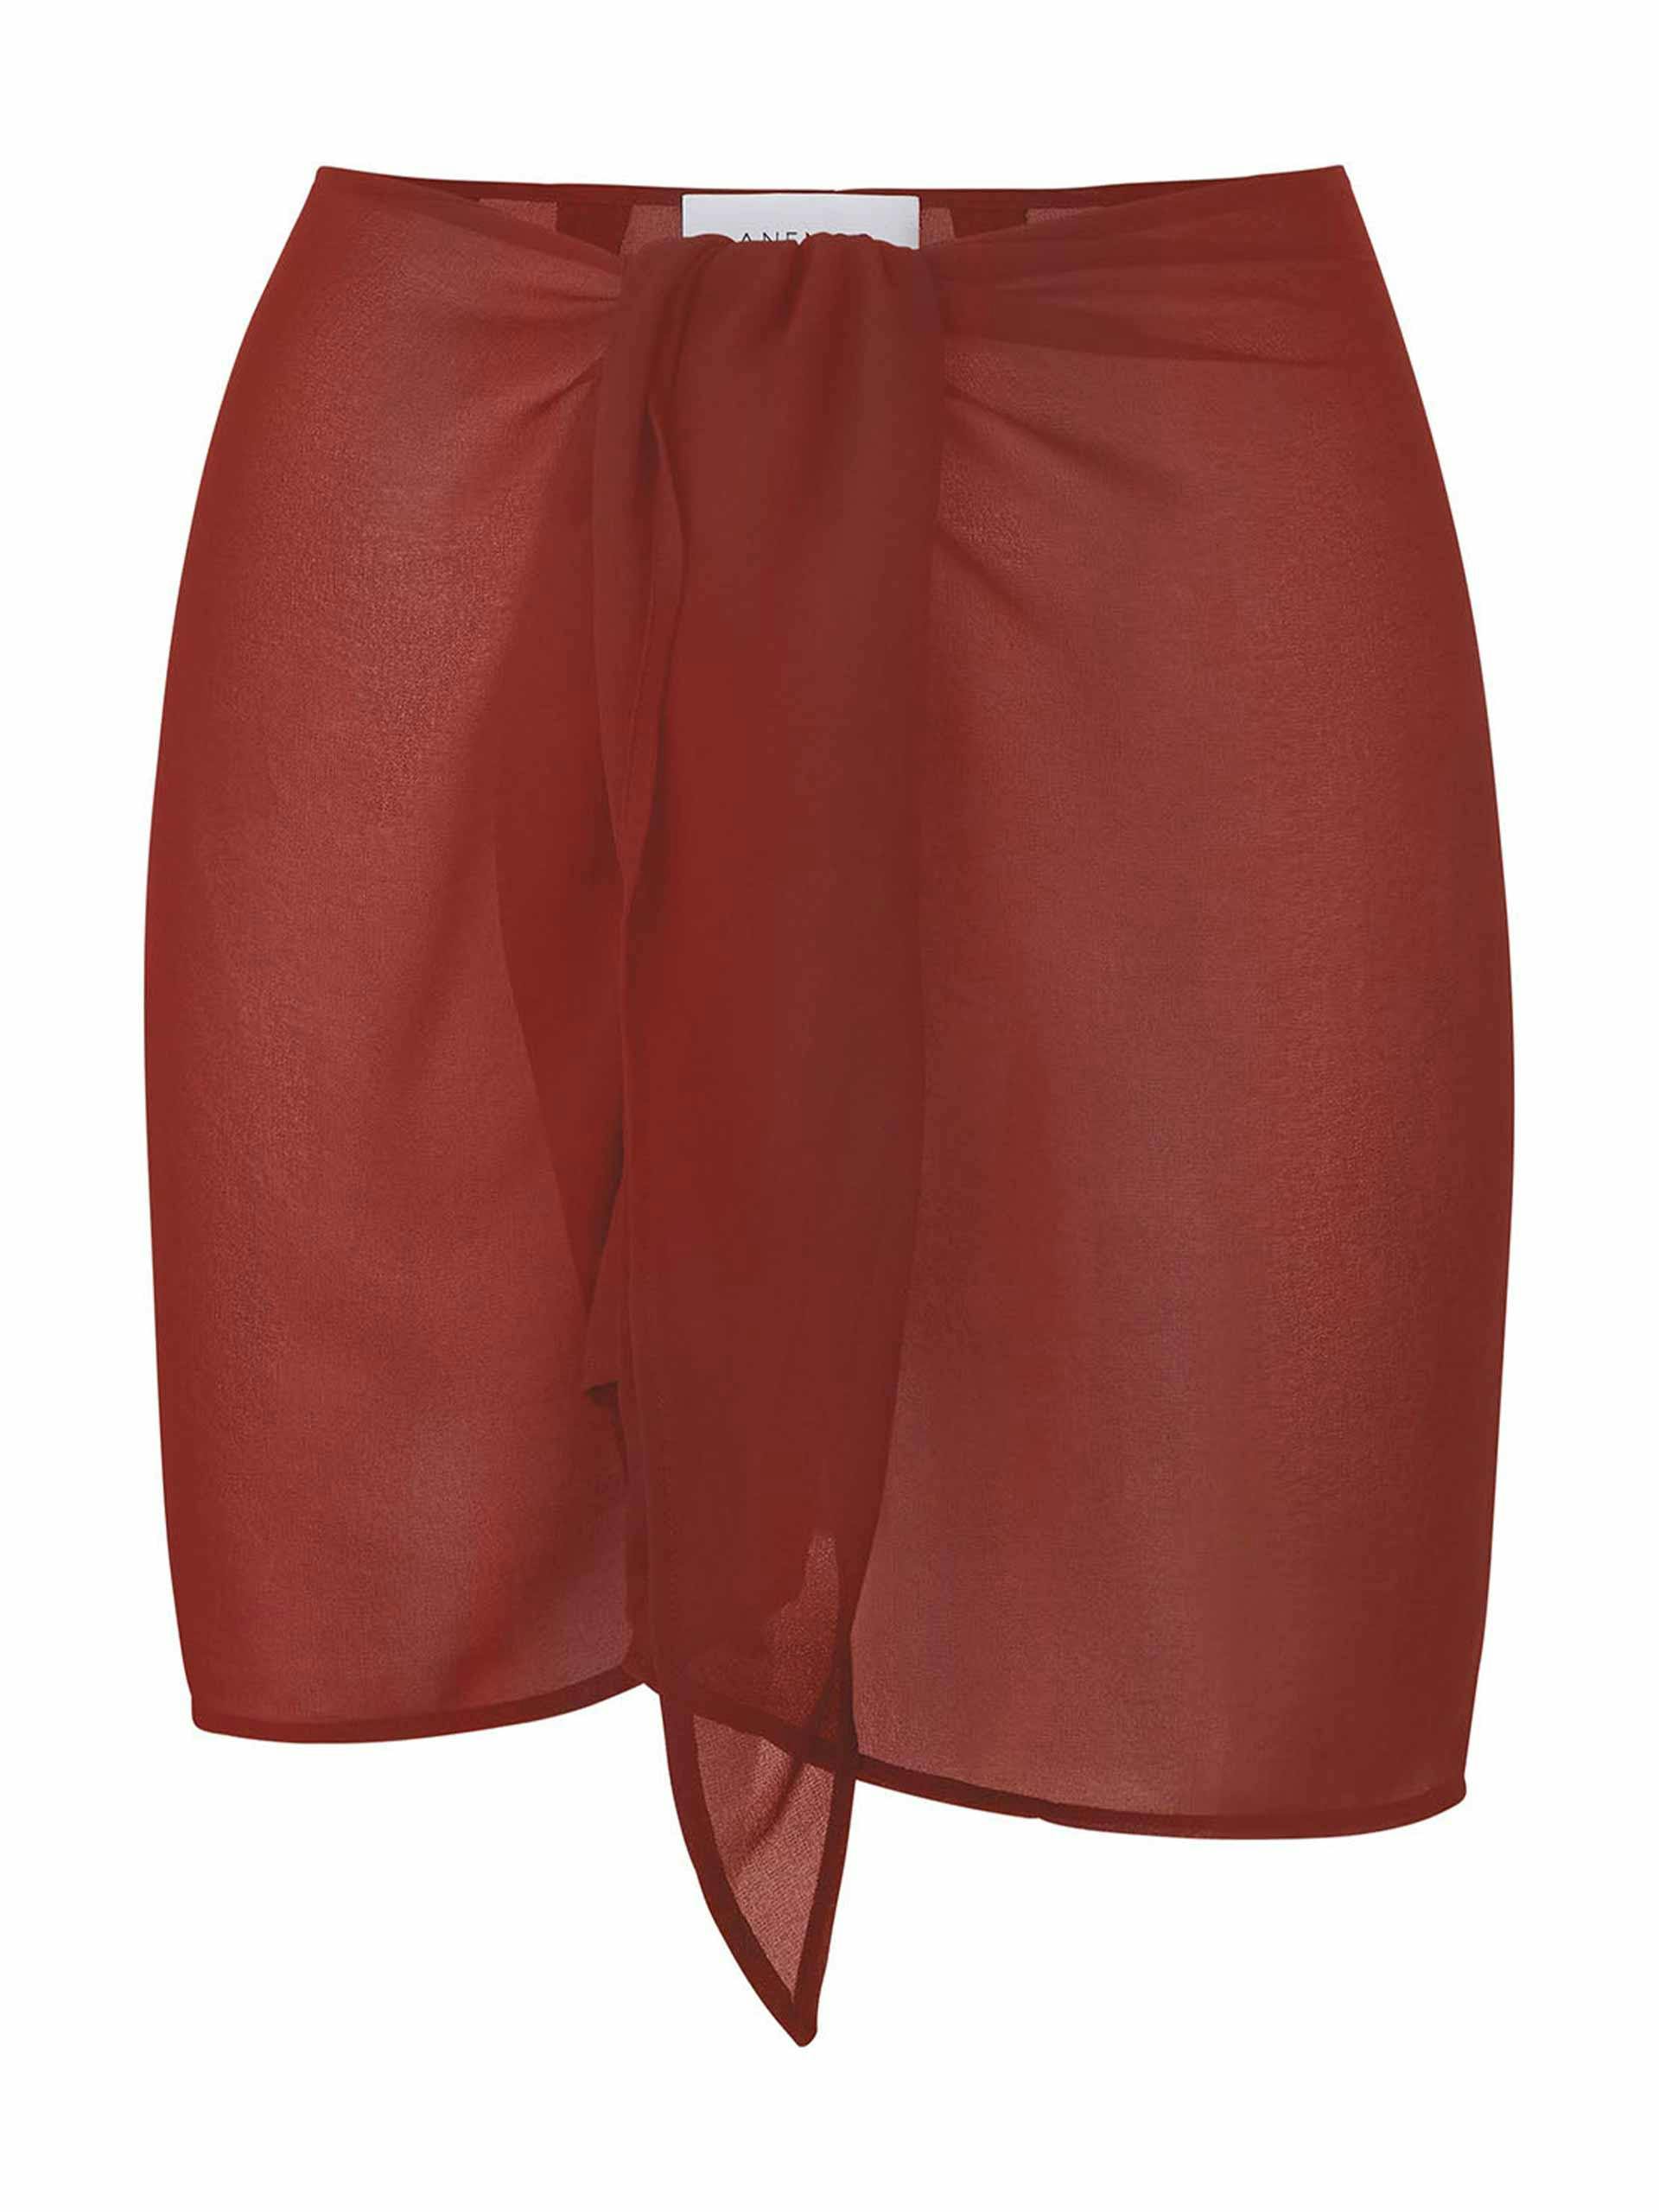 The Wrap mini skirt in sheer eco-chiffon